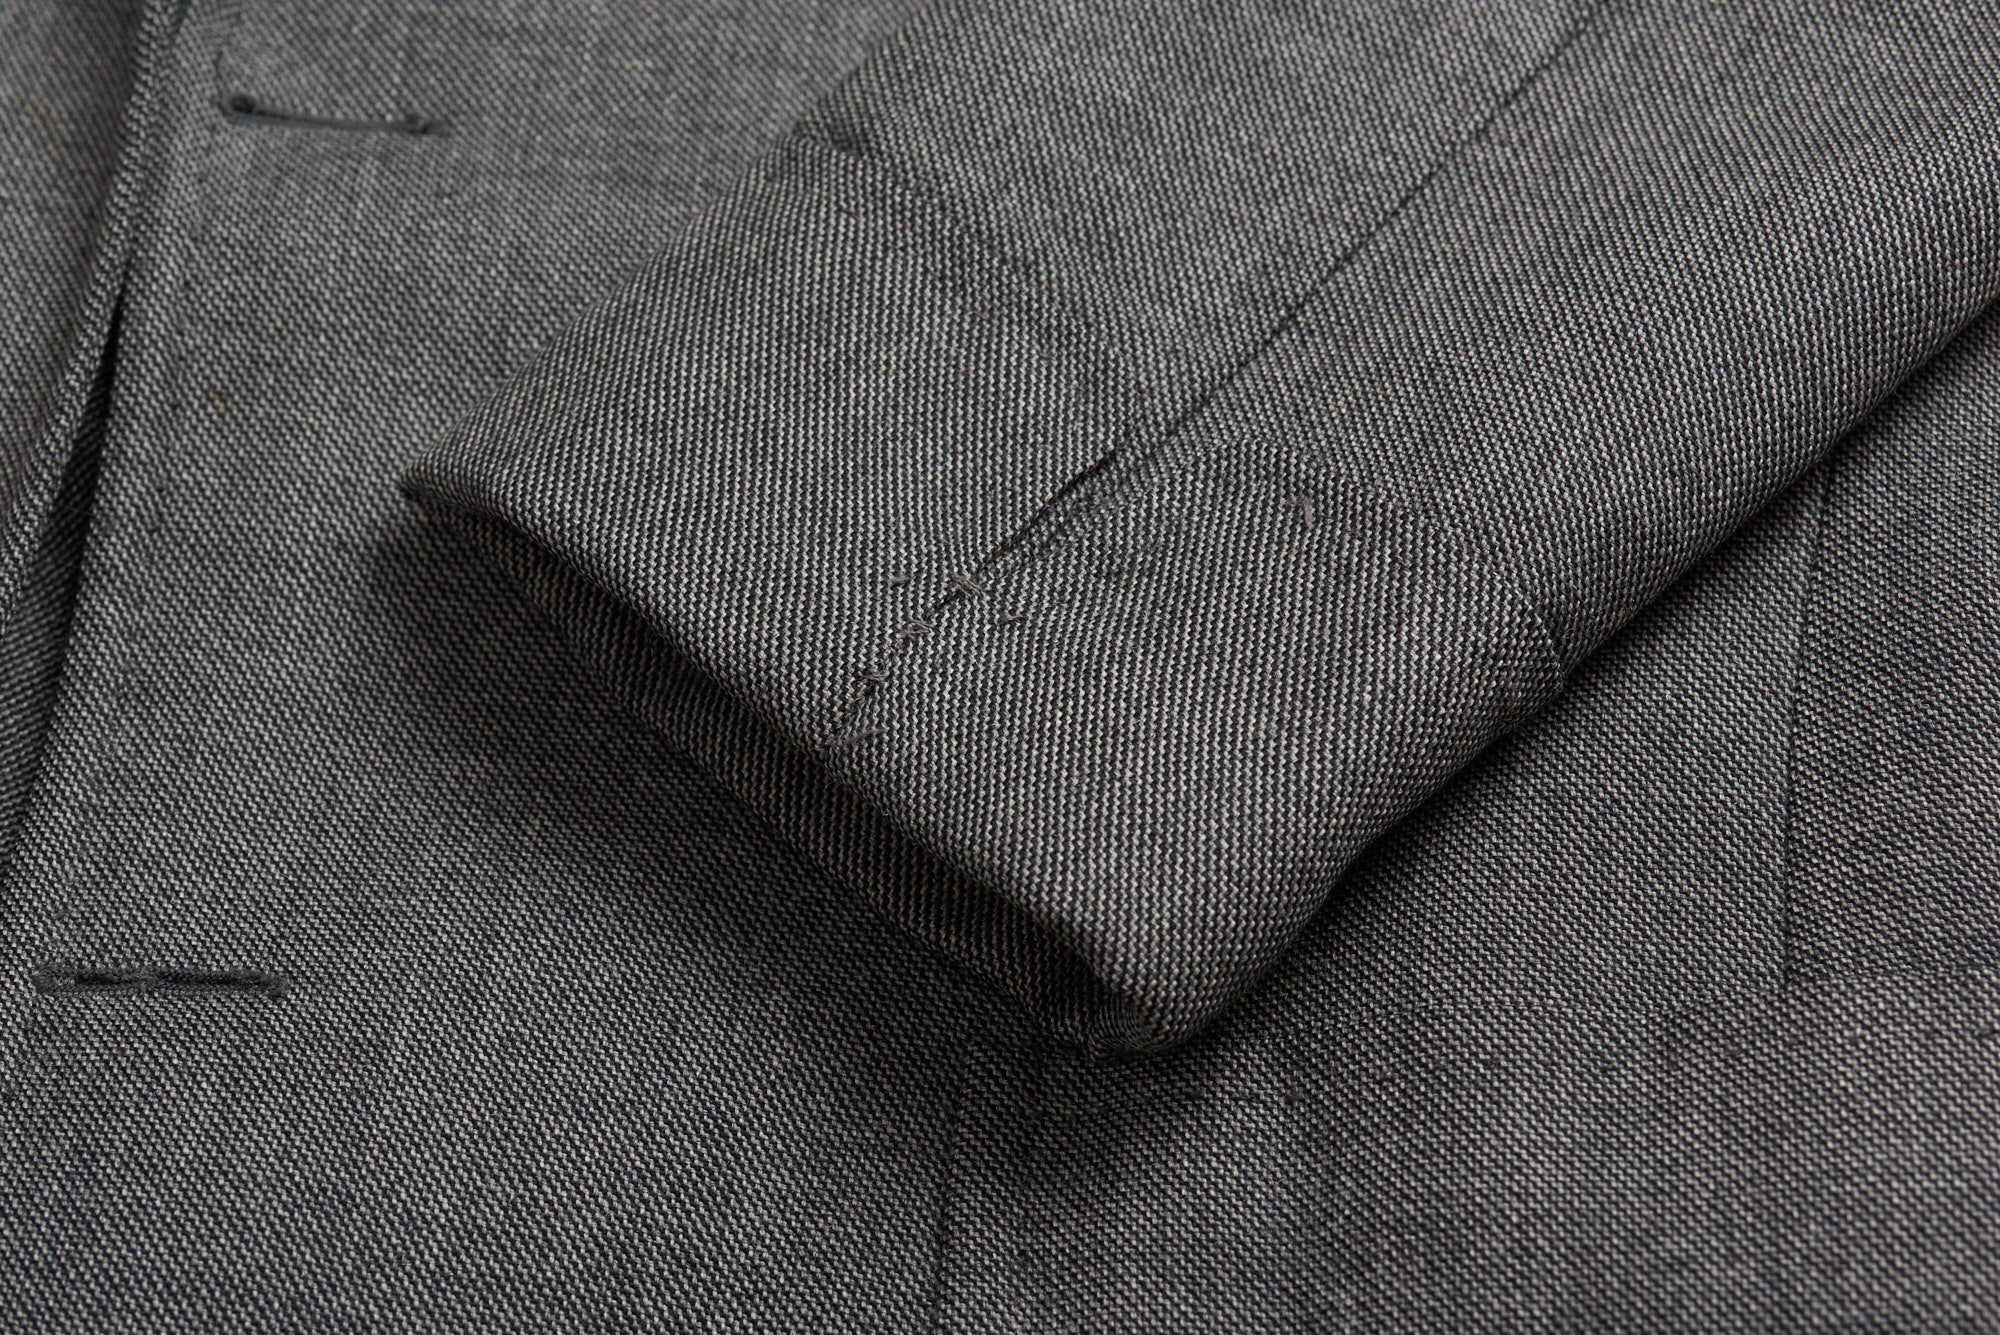 STILE LATINO Napoli Gray Wool Coat EU 48 US 38 STILE LATINO